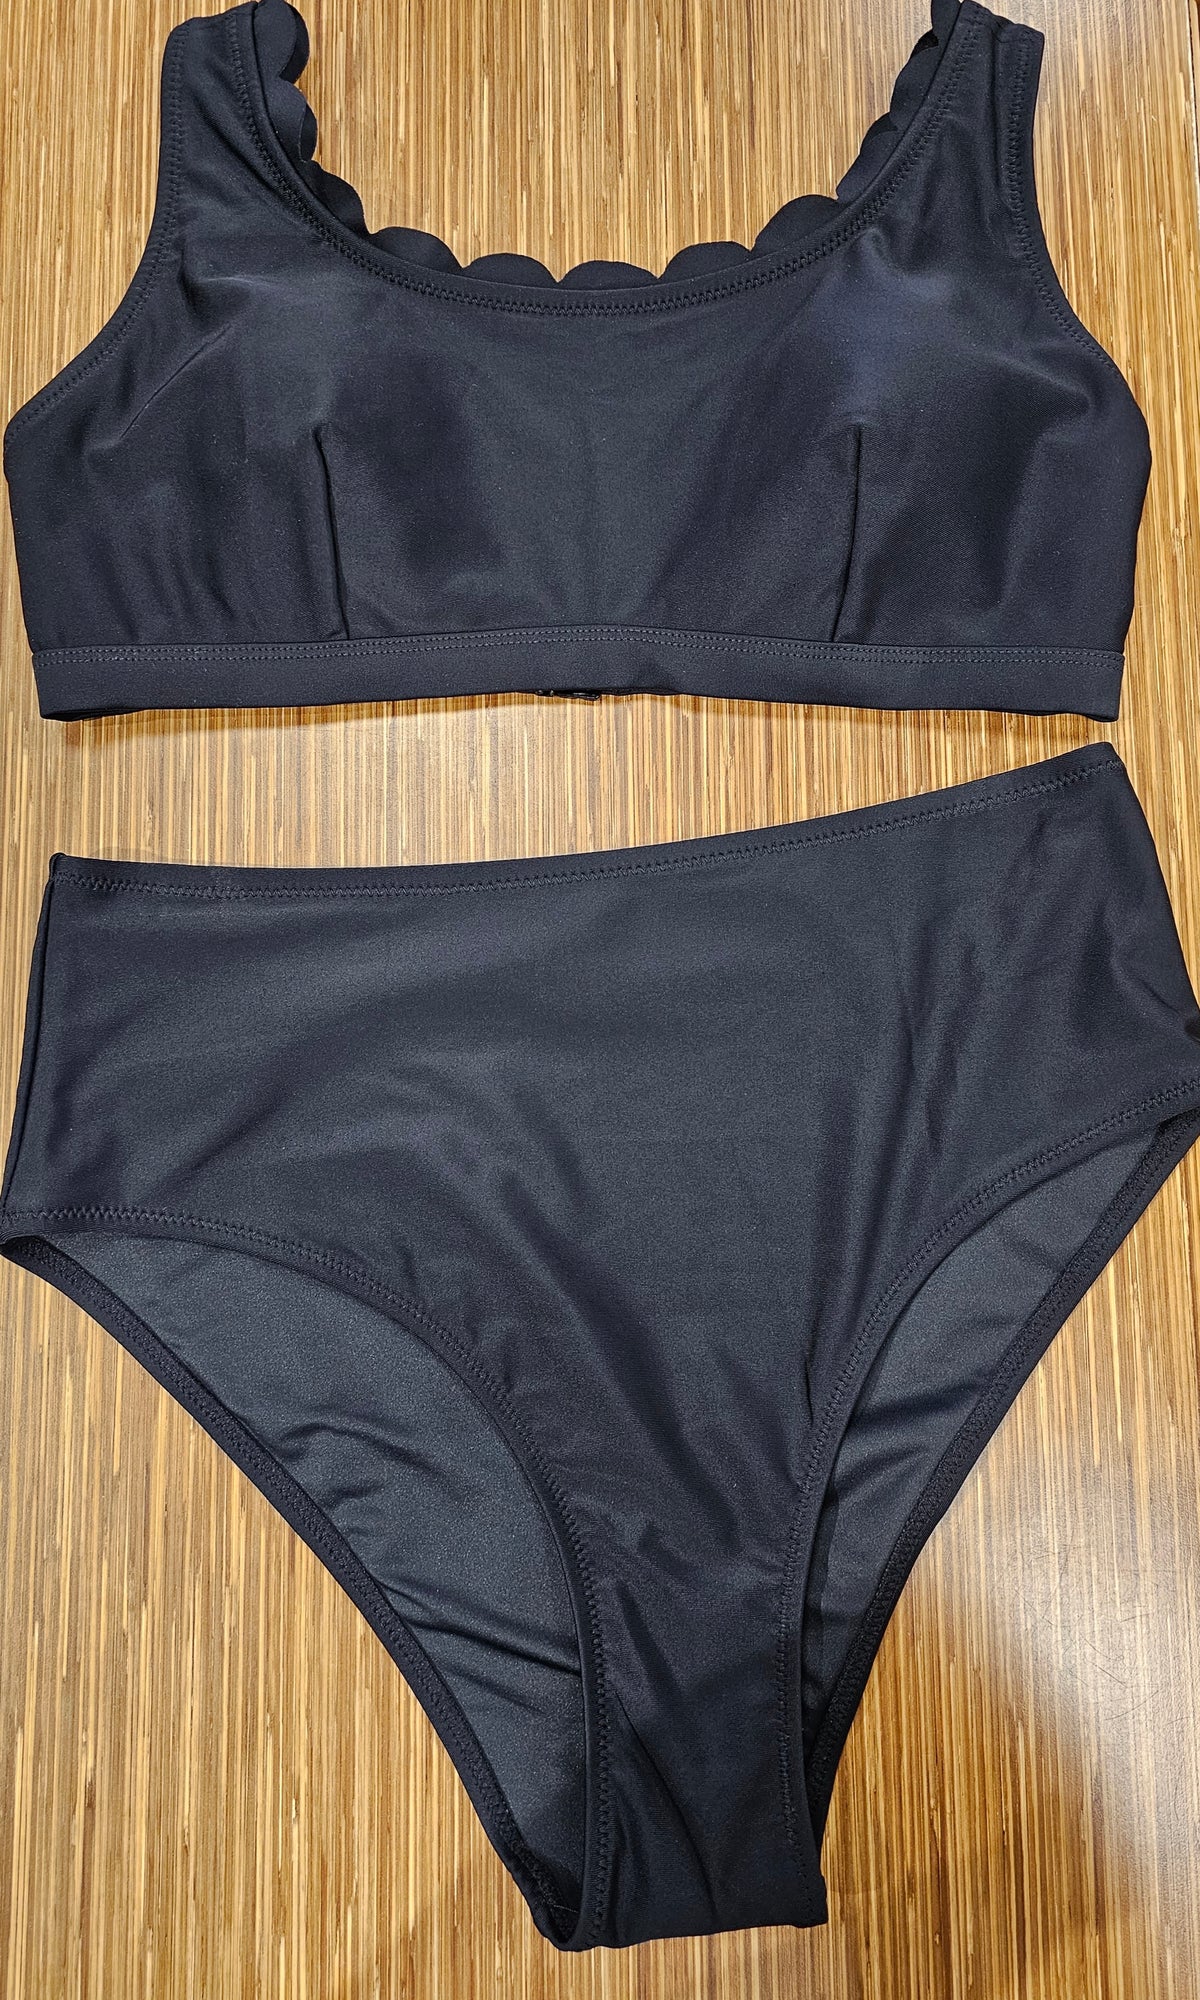 Charmo Bikini Swimsuit for Women Two Piece Swimwear Kuwait